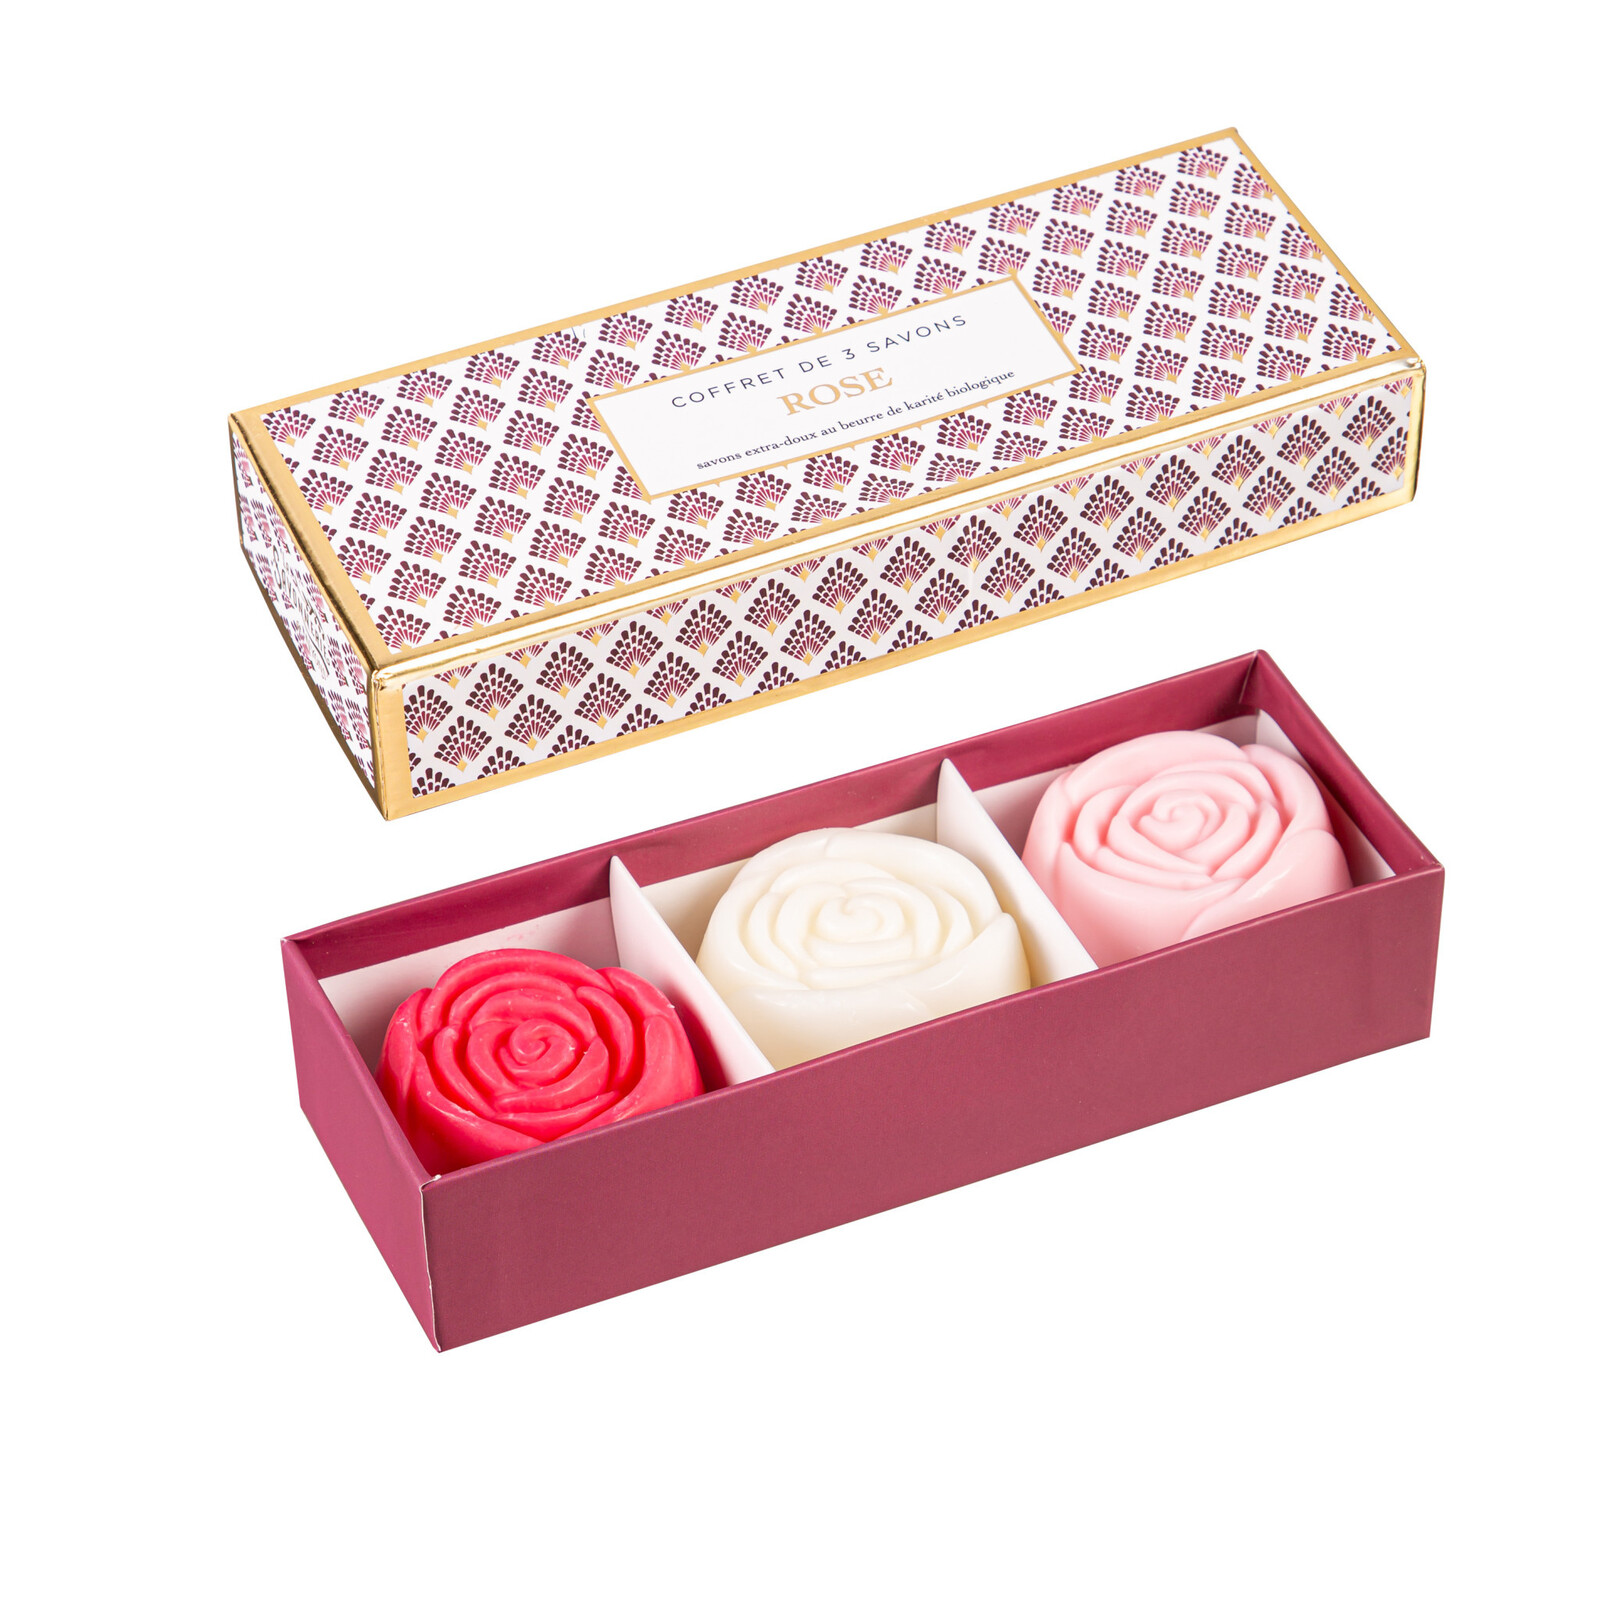 Evergreen Enterprises Floral Shaped Rose Scented Soap Set in Gift Box   7SPB015 loading=